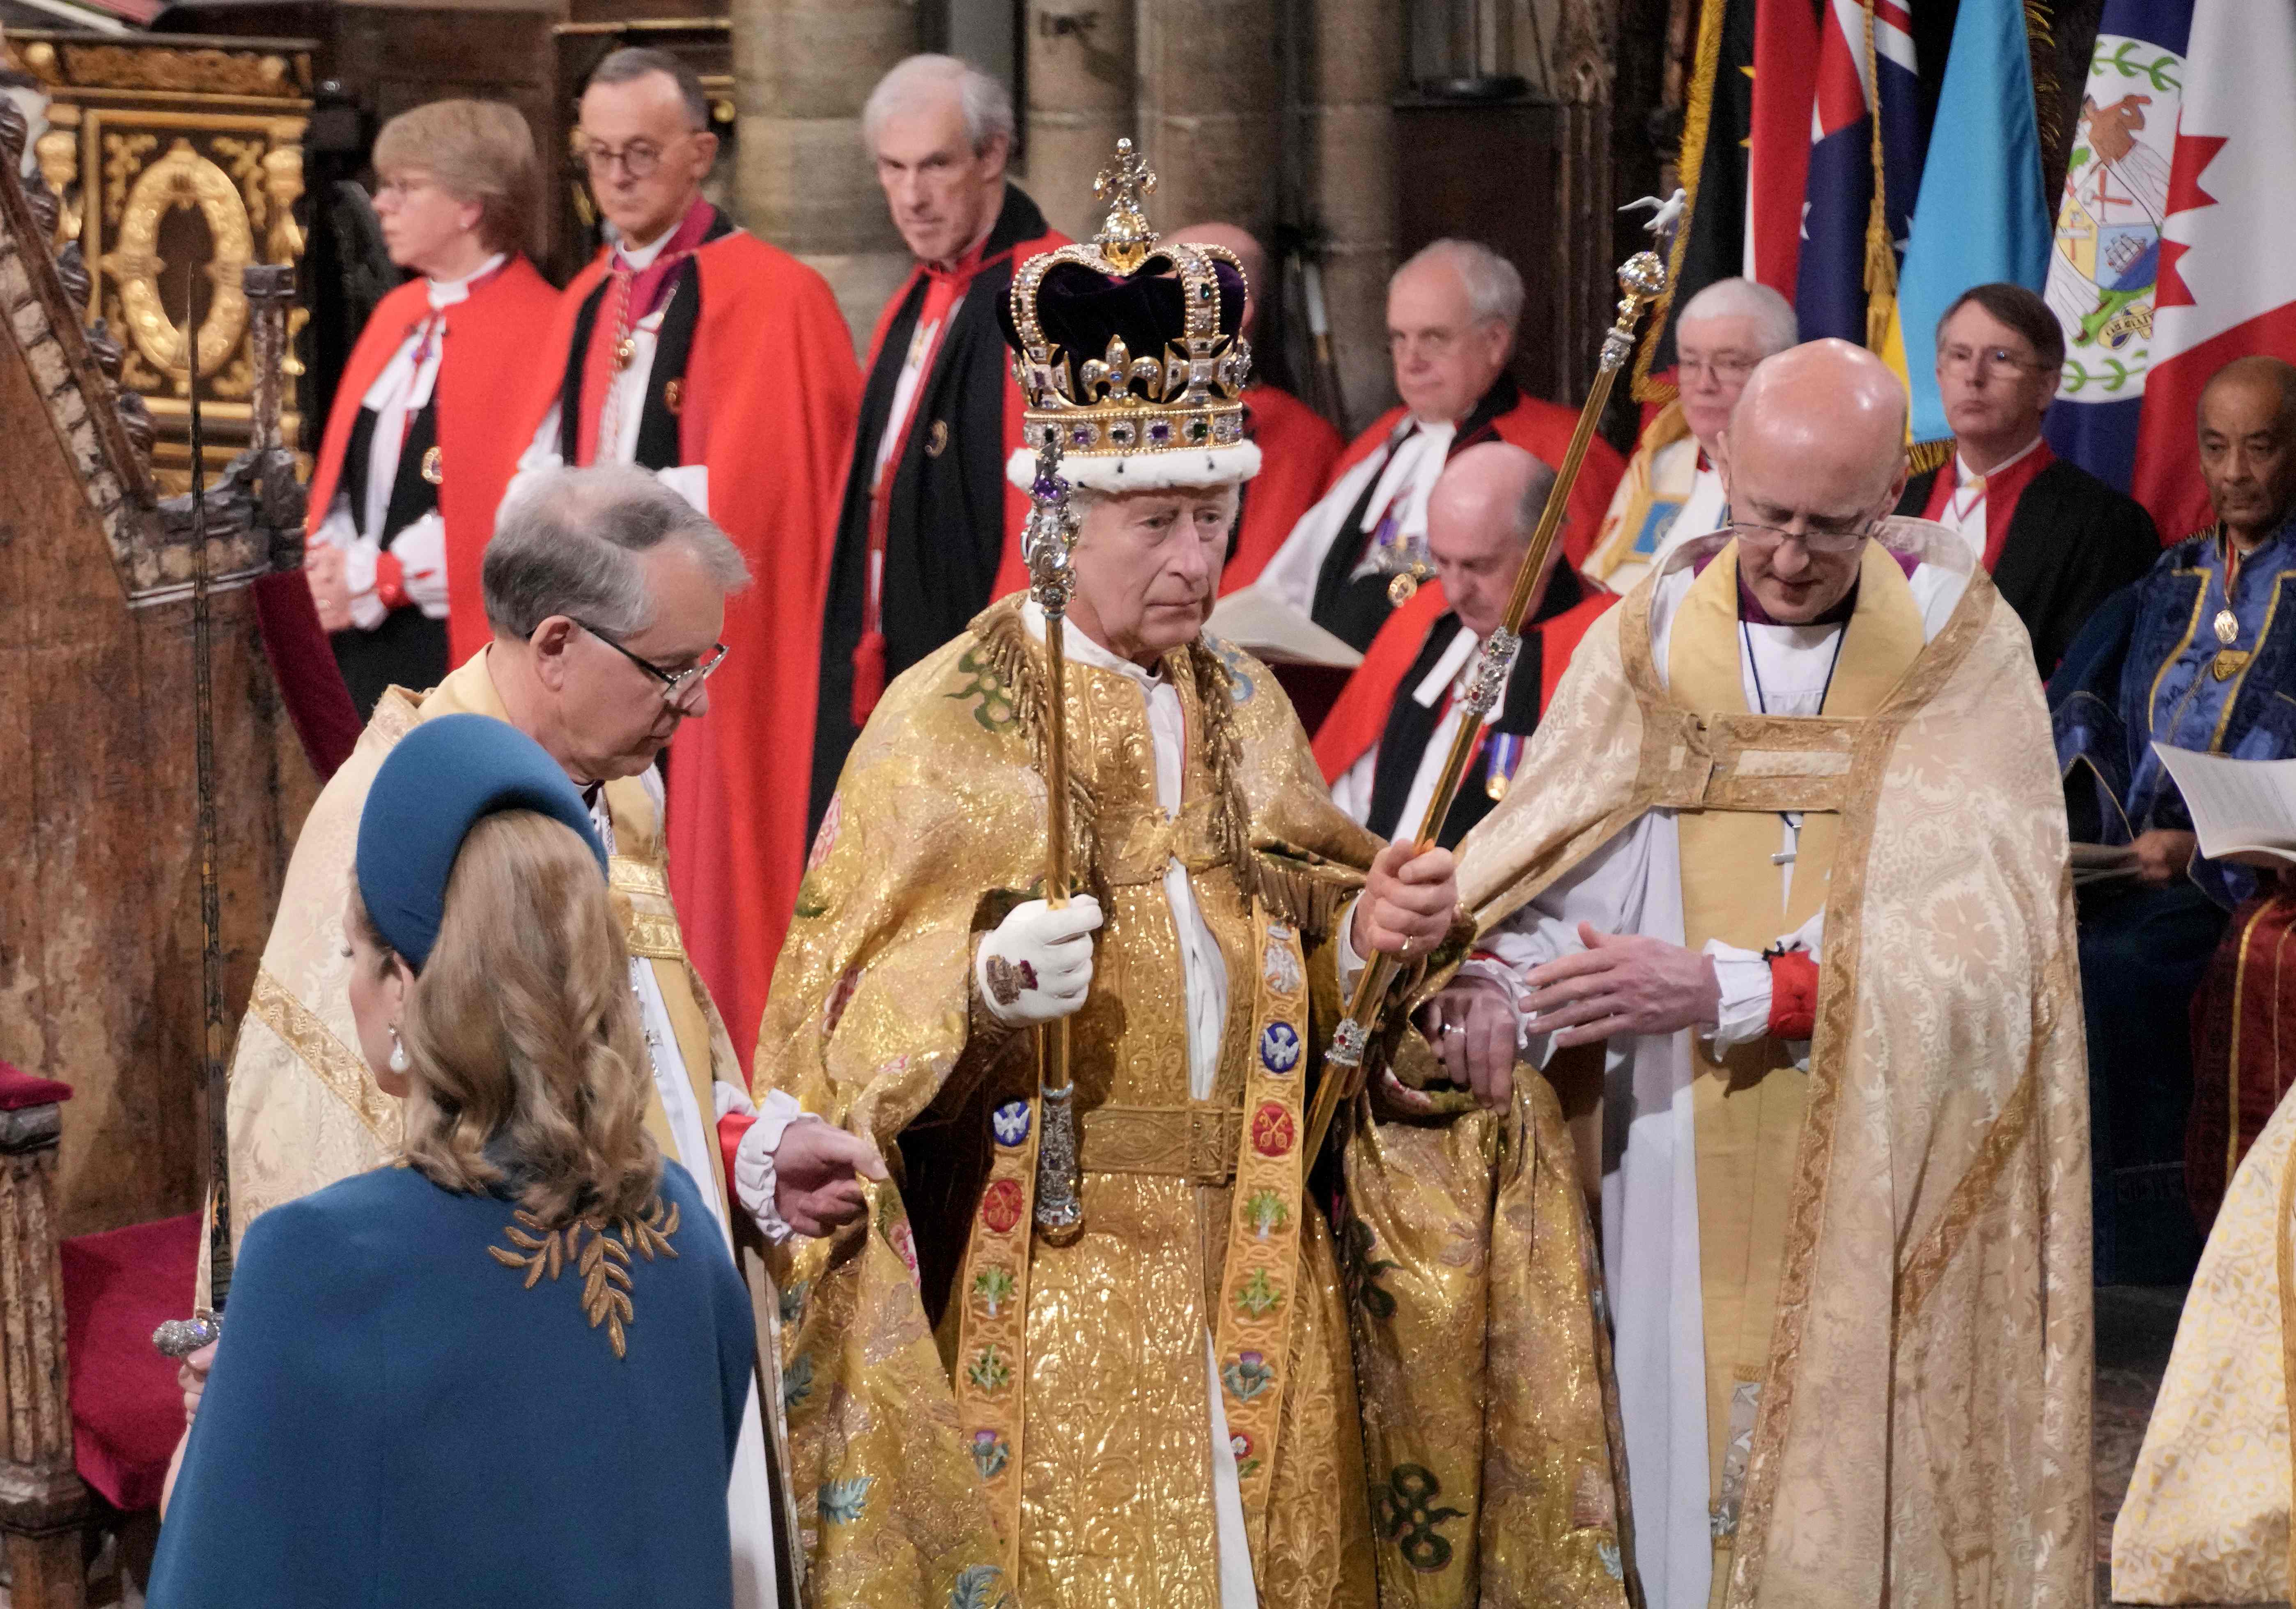 Charles became king after Queen Elizabeth's death in September last year